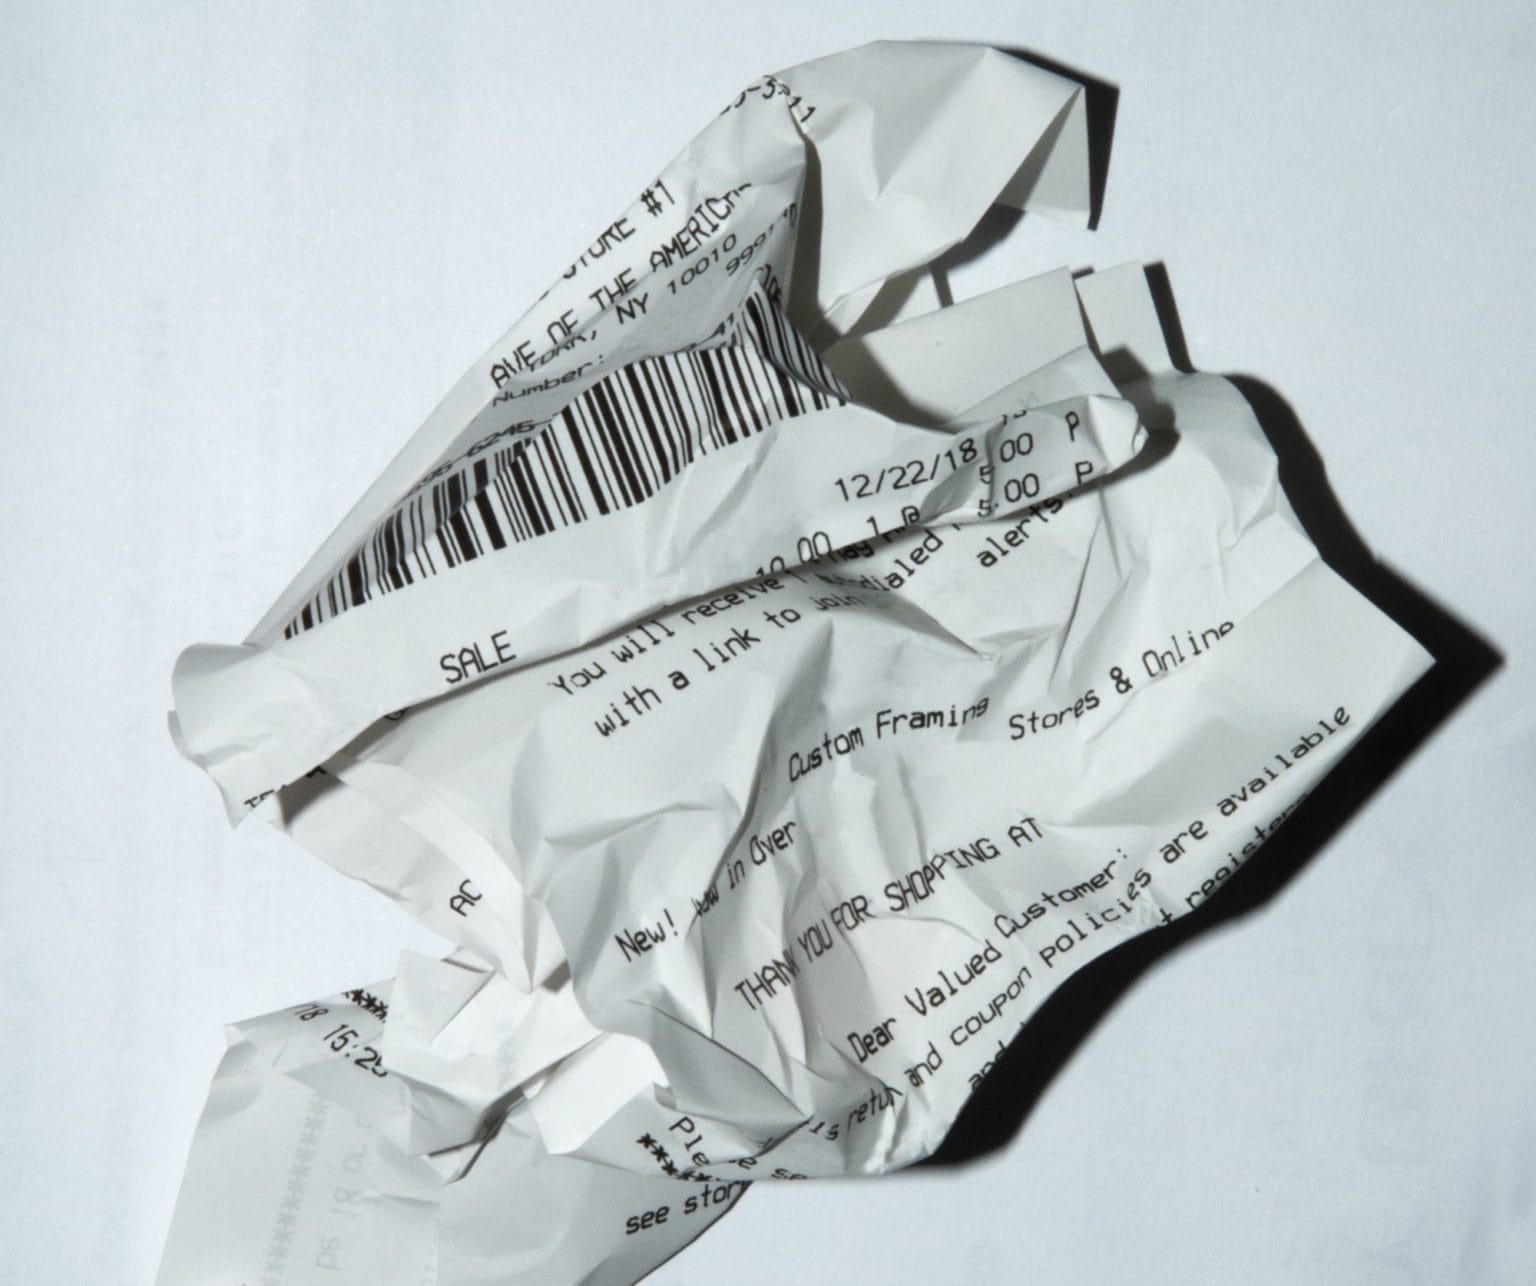 a crumpled up paper receipt